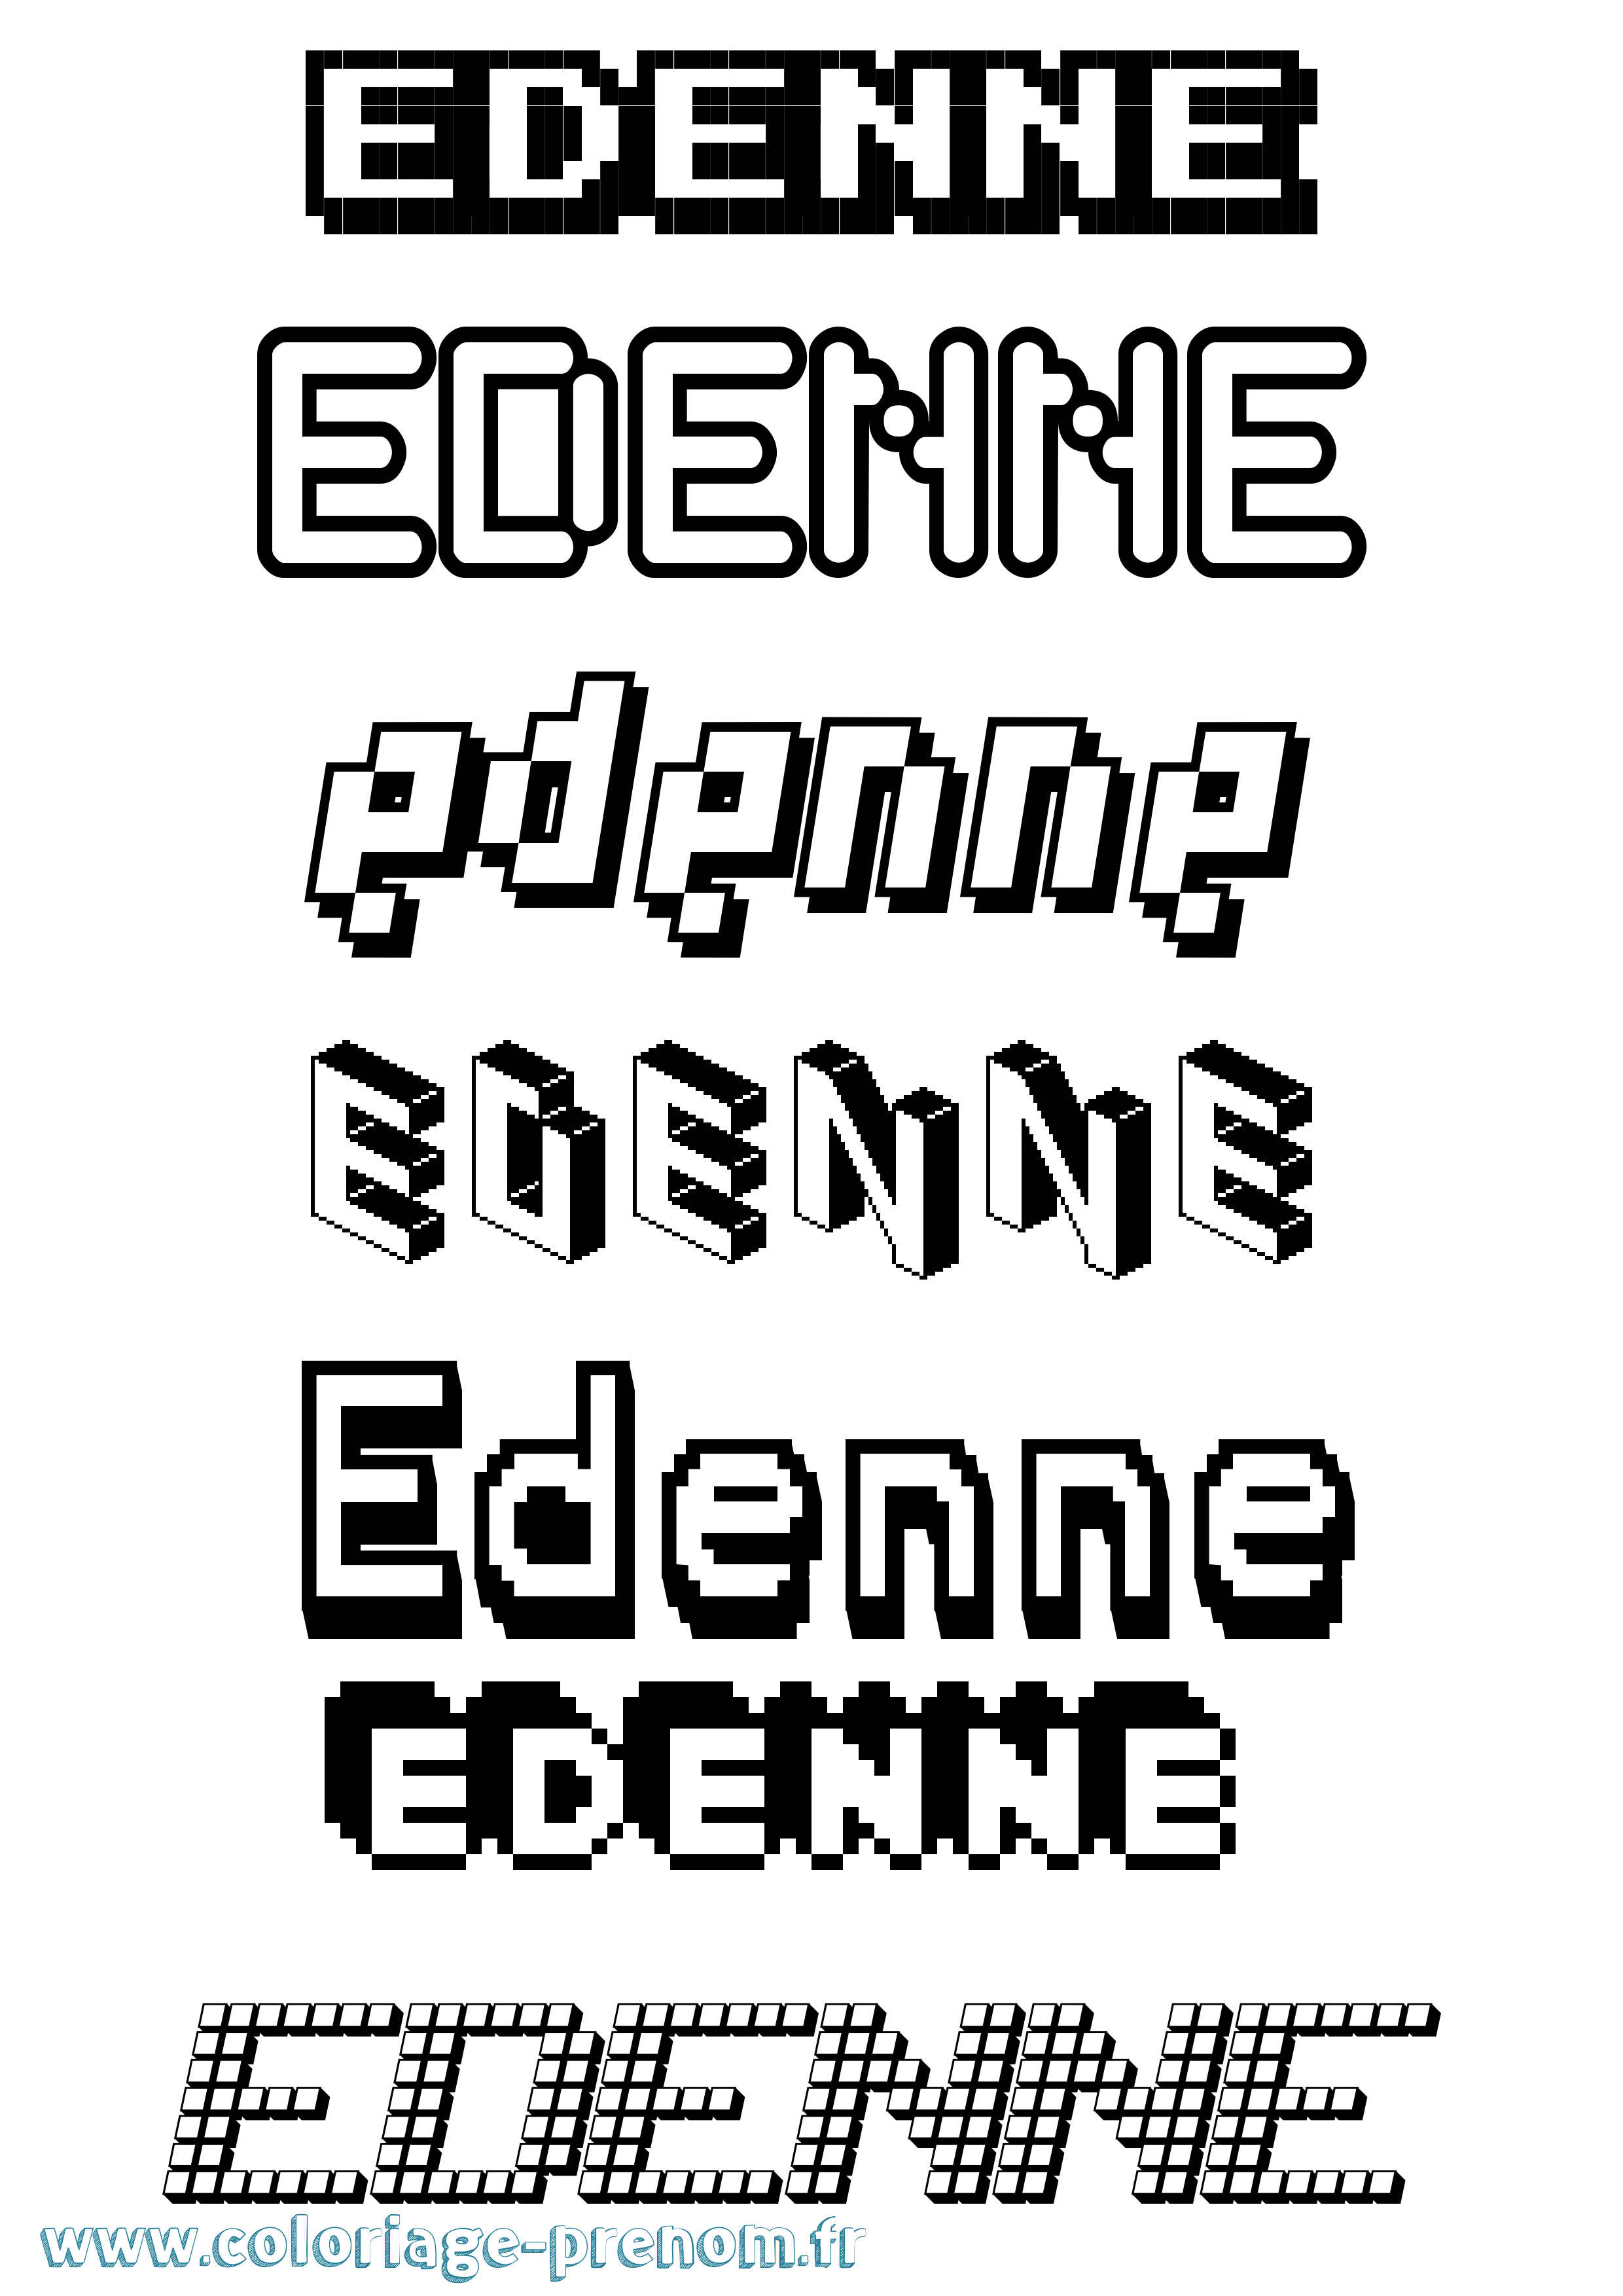 Coloriage prénom Edenne Pixel